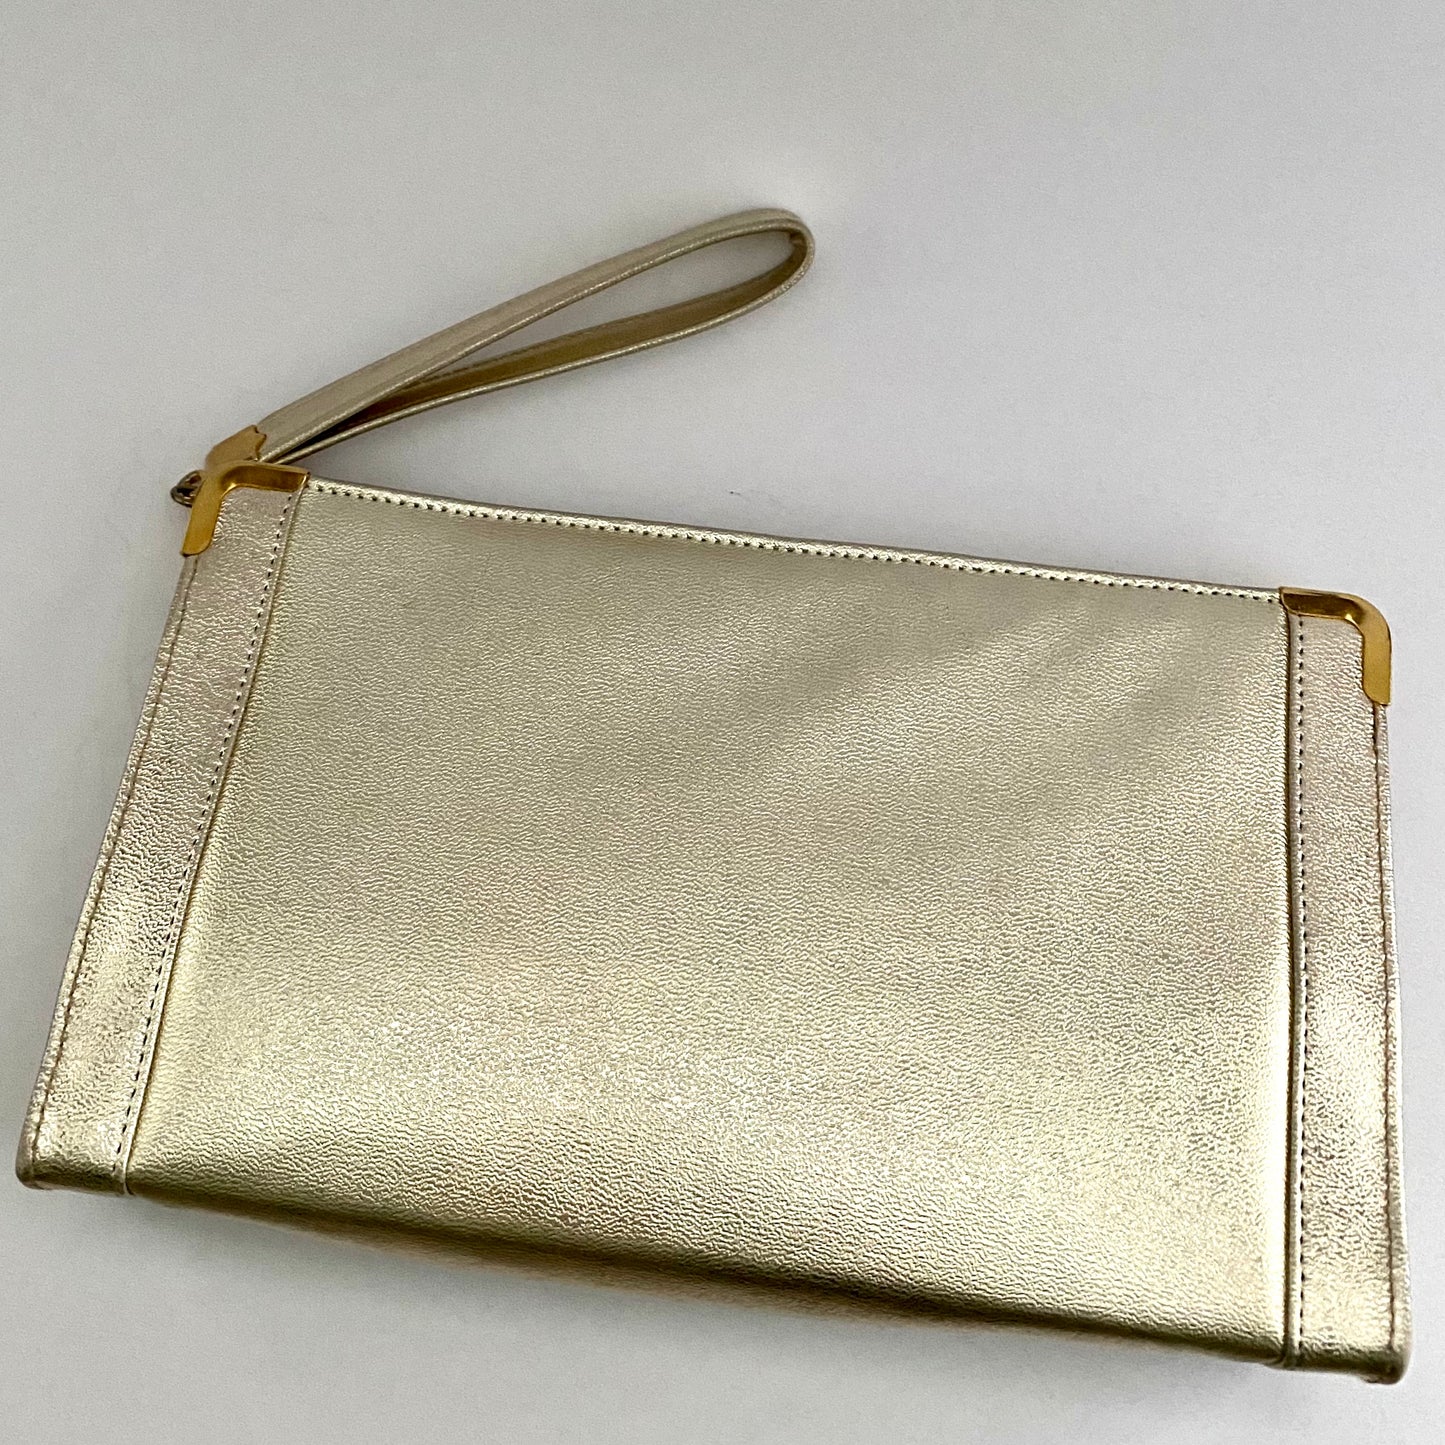 1960s Andé Metallic Pale Gold Wristlet Clutch